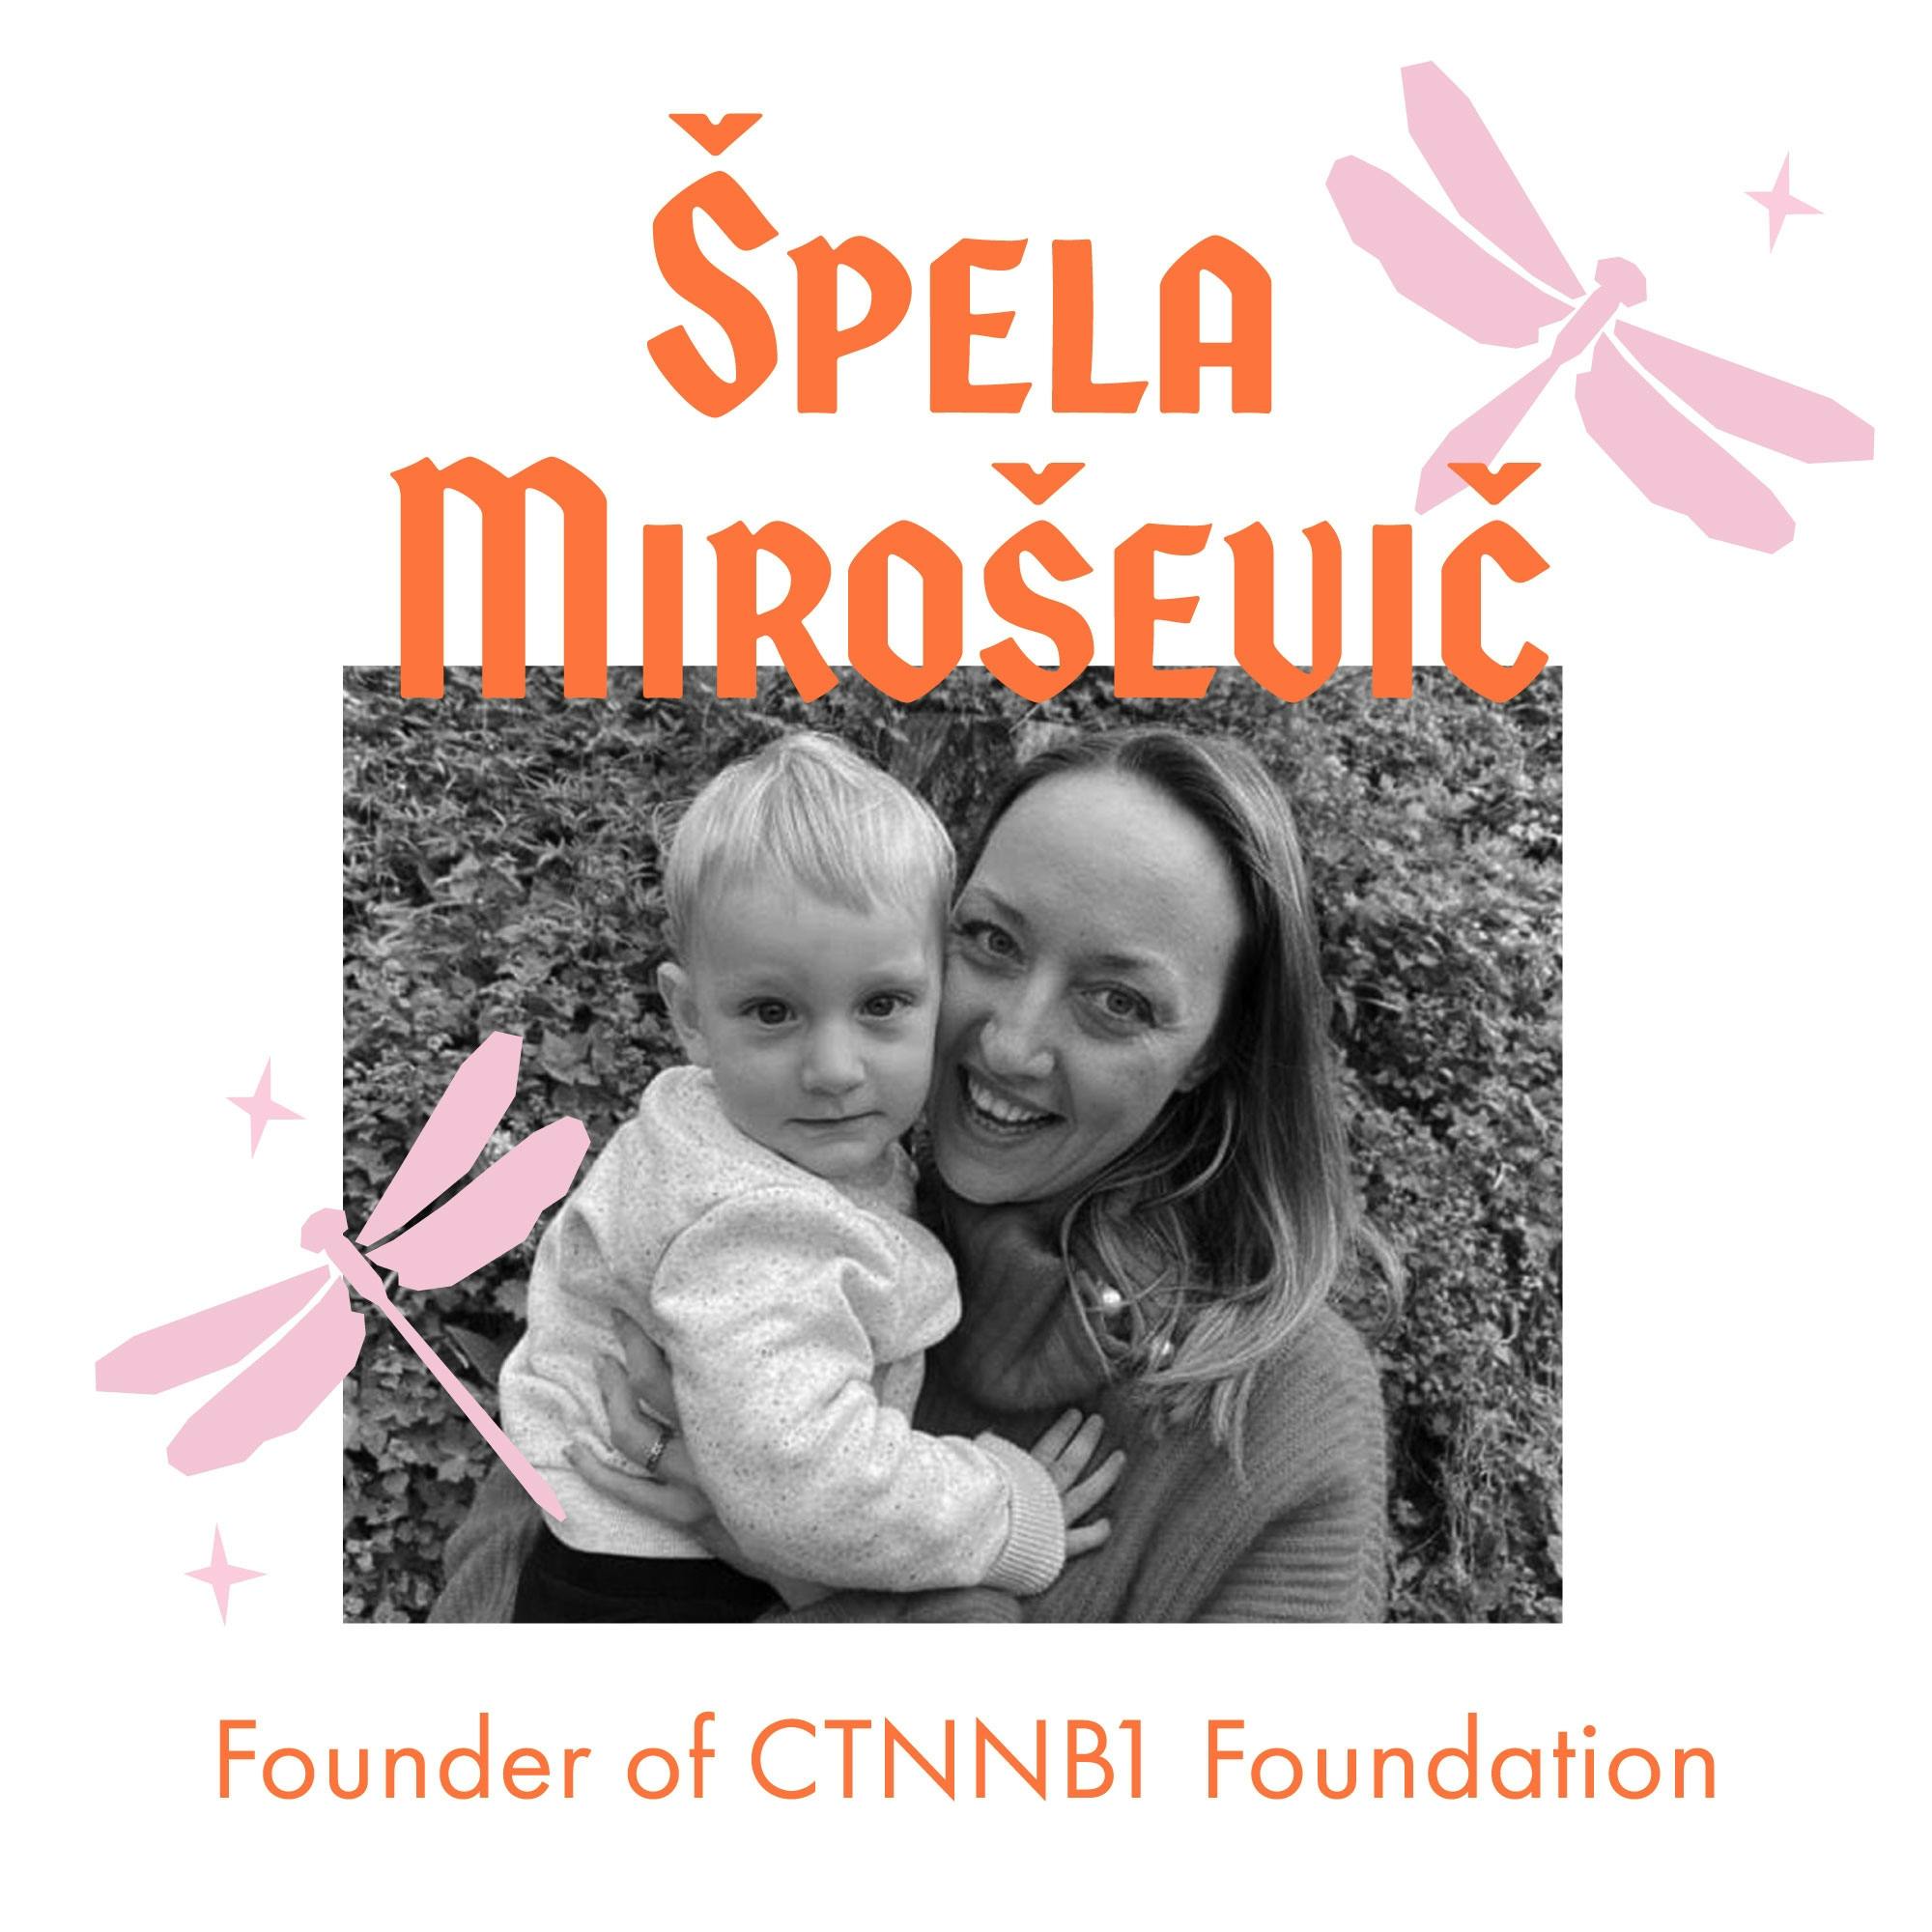 Leading the World Gene Therapy Program for CTNNB1 With Fellow Rare Mama – Špela Miroševič